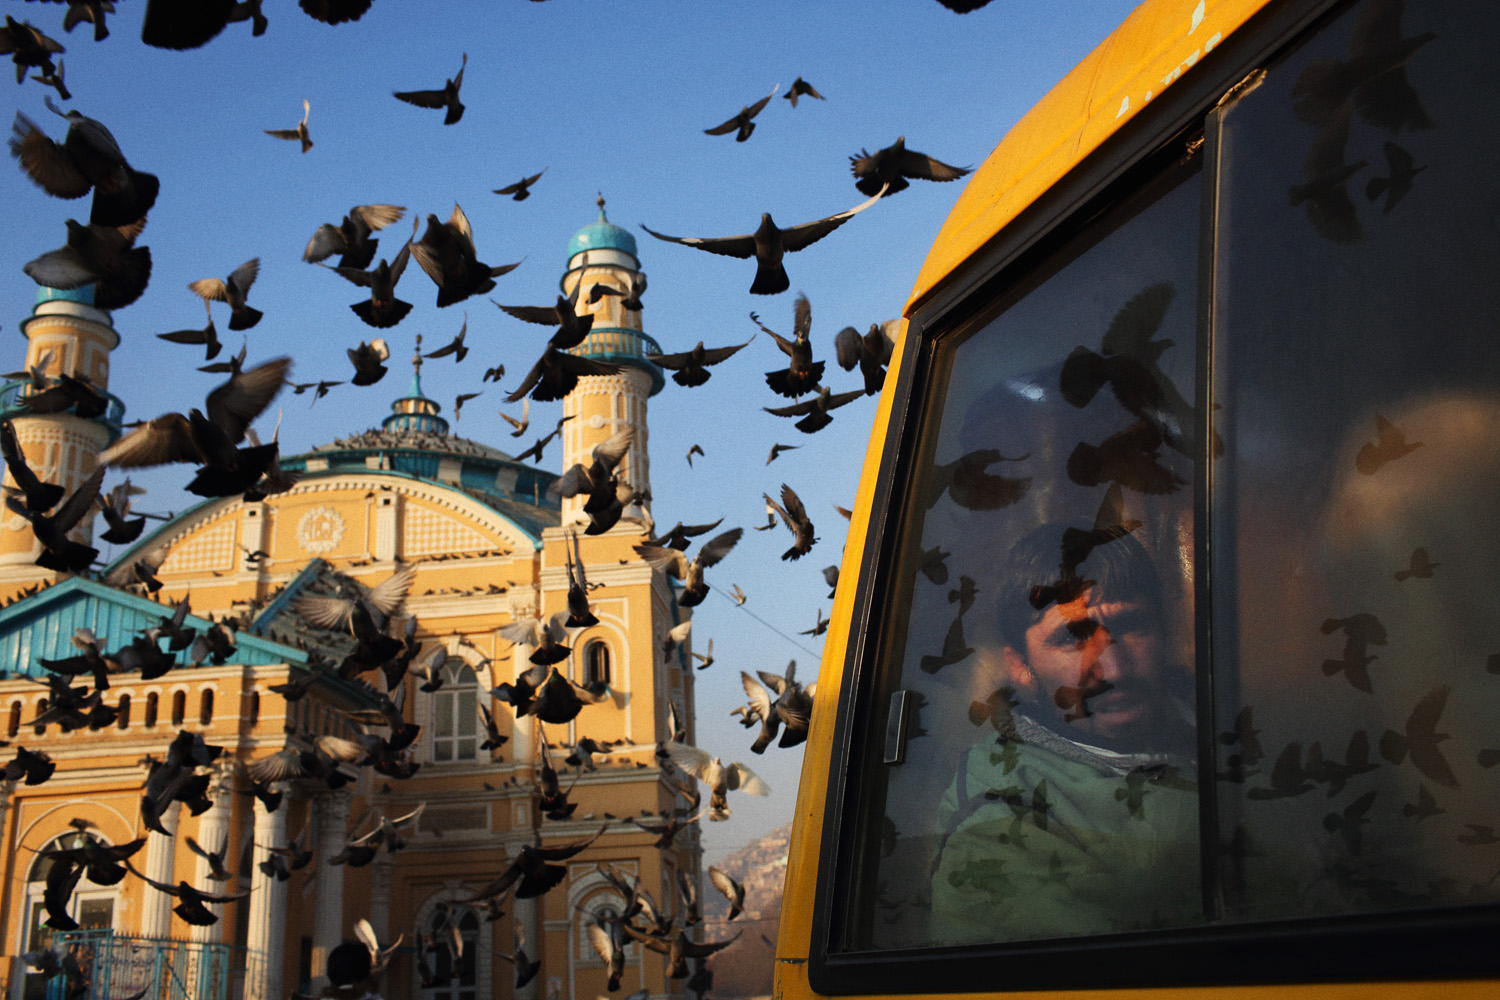 Pigeons take to the sky outside Shah e-Doh Shamshira Mosque in Kabul.